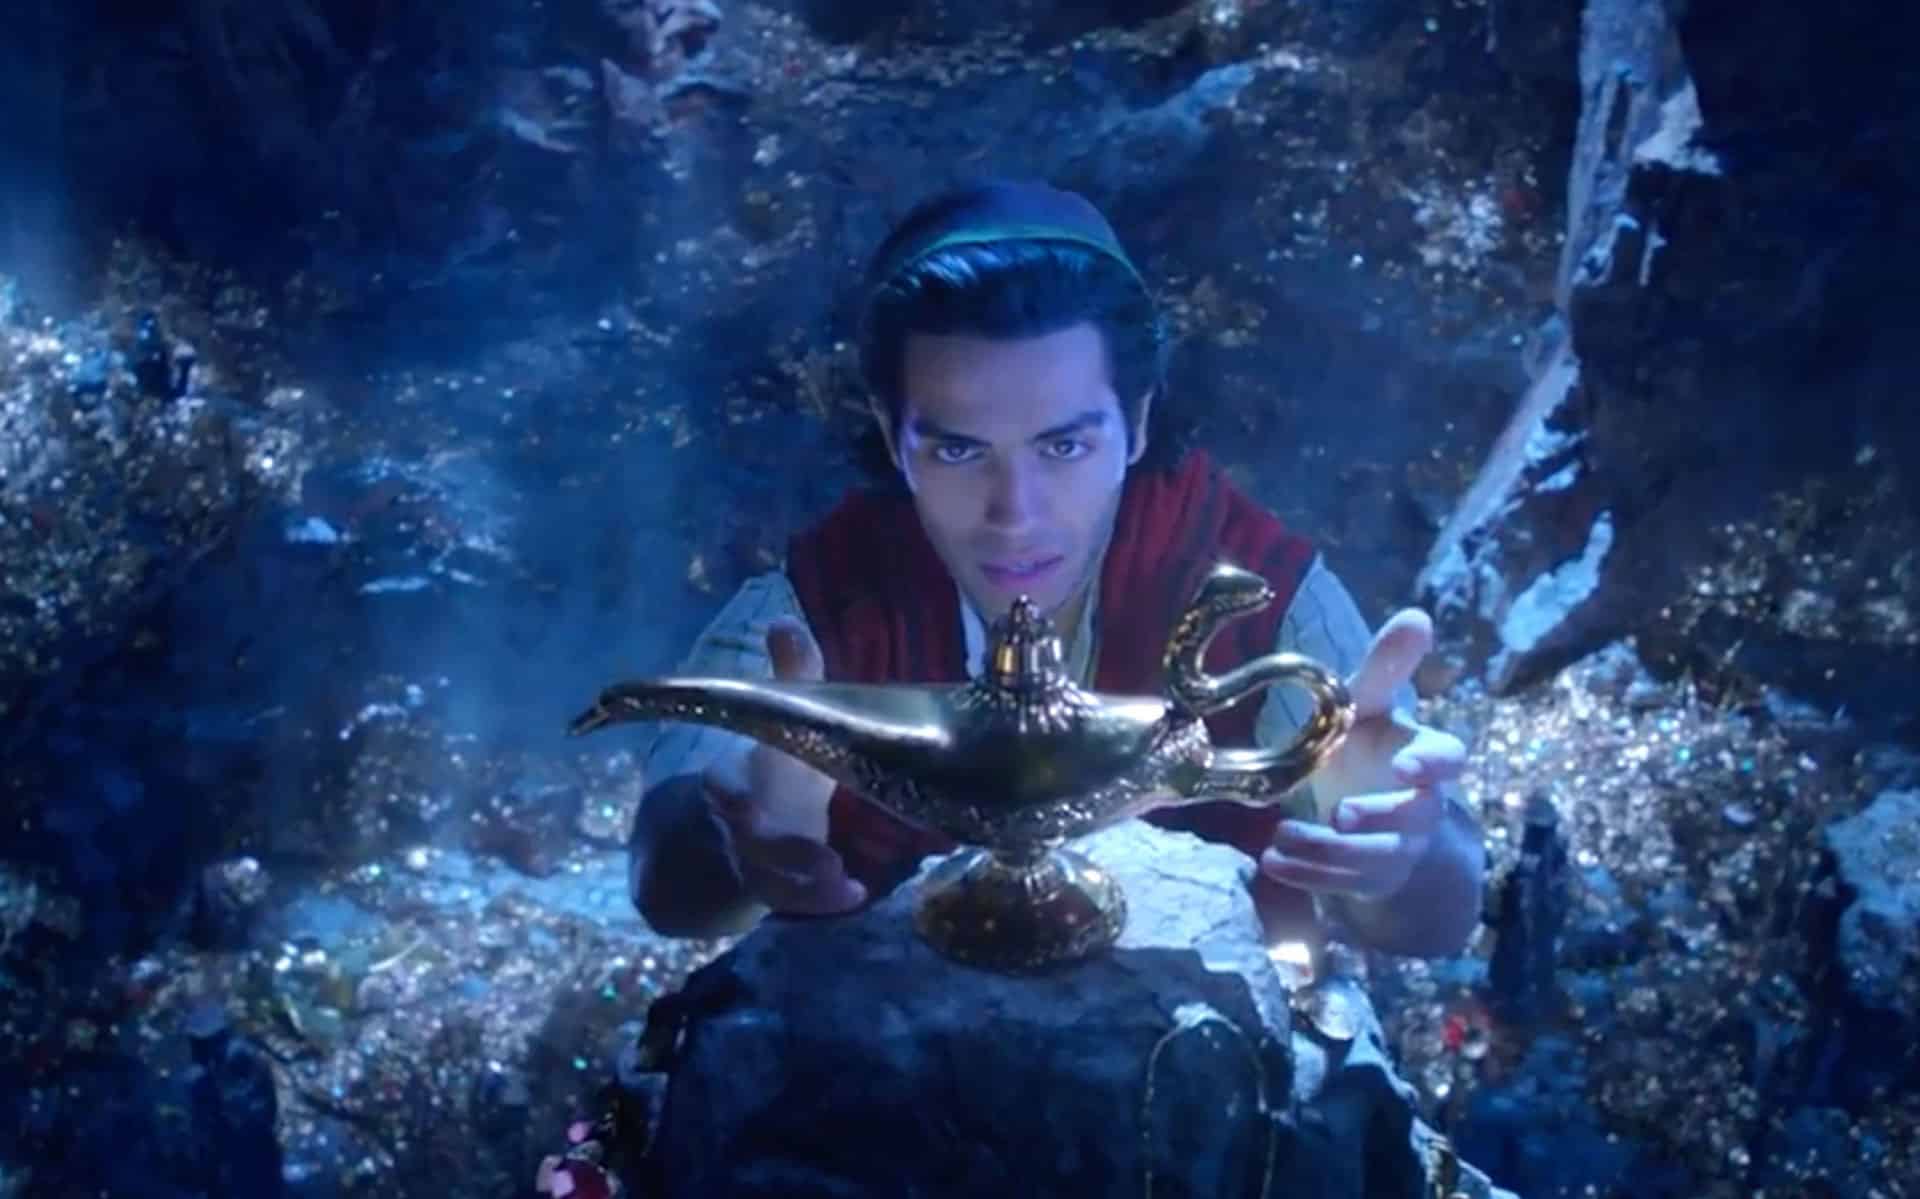 Aladdin: rivelata una nuova immagine della principessa Jasmine